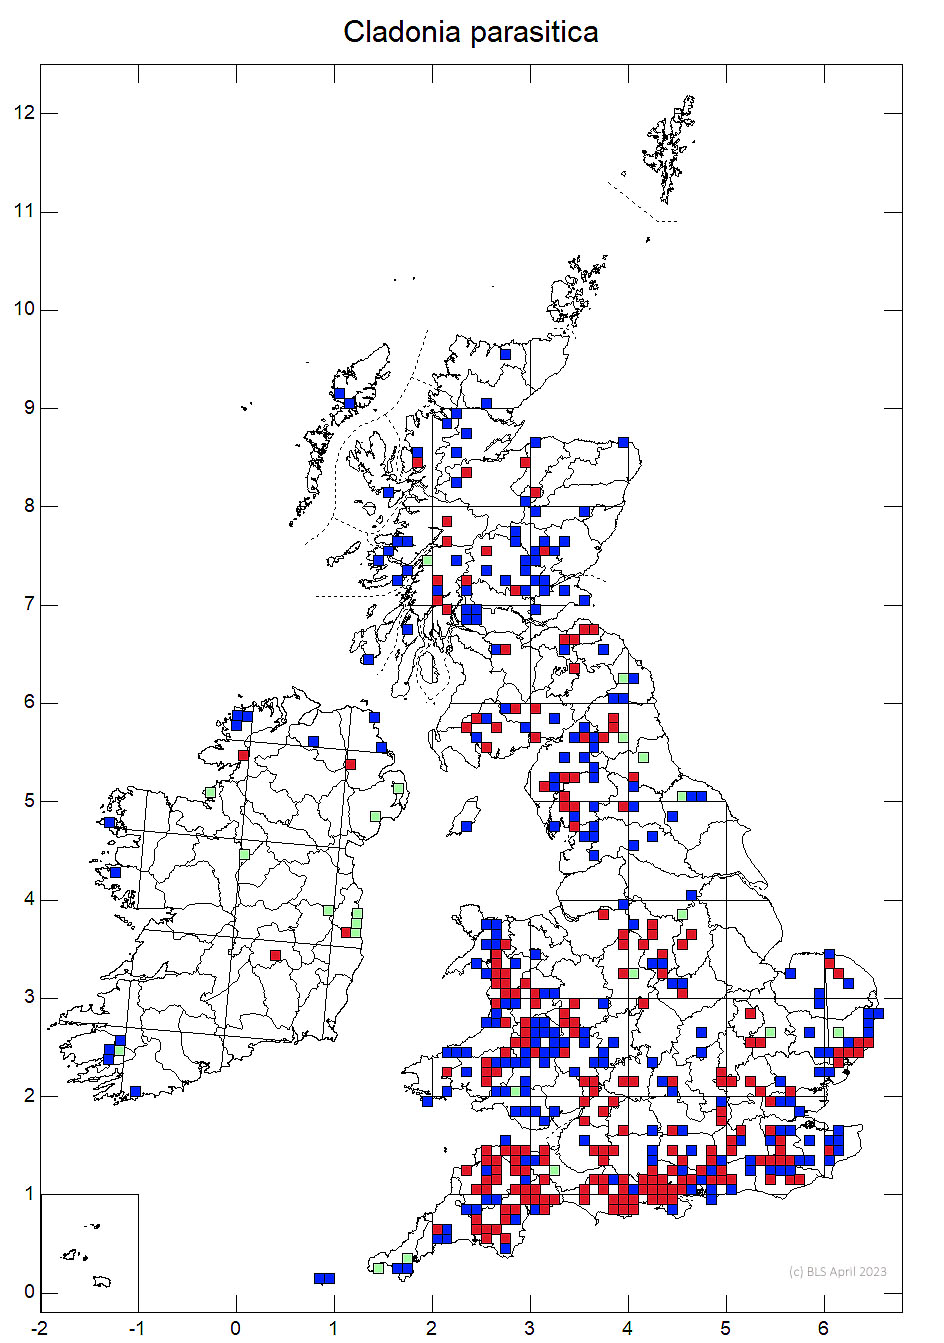 Cladonia parasitica 10km sq distribution map